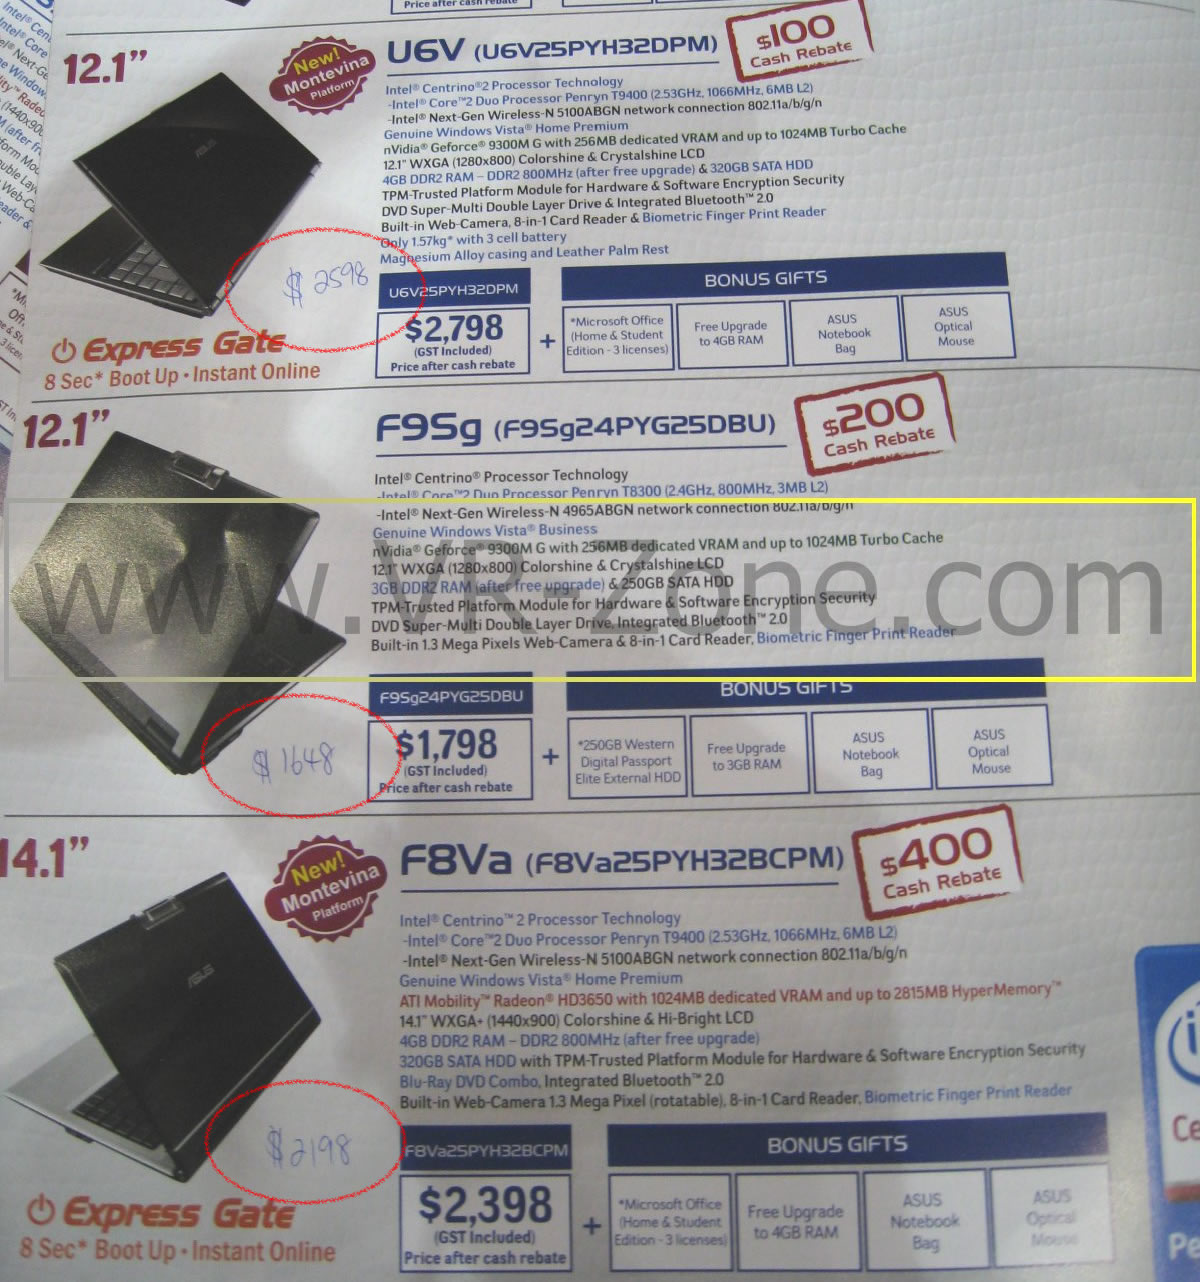 Sitex 2008 price list image brochure of (LAST DAY Deals) VR-Zone Asus U6v F9sg F8va IMG 1714